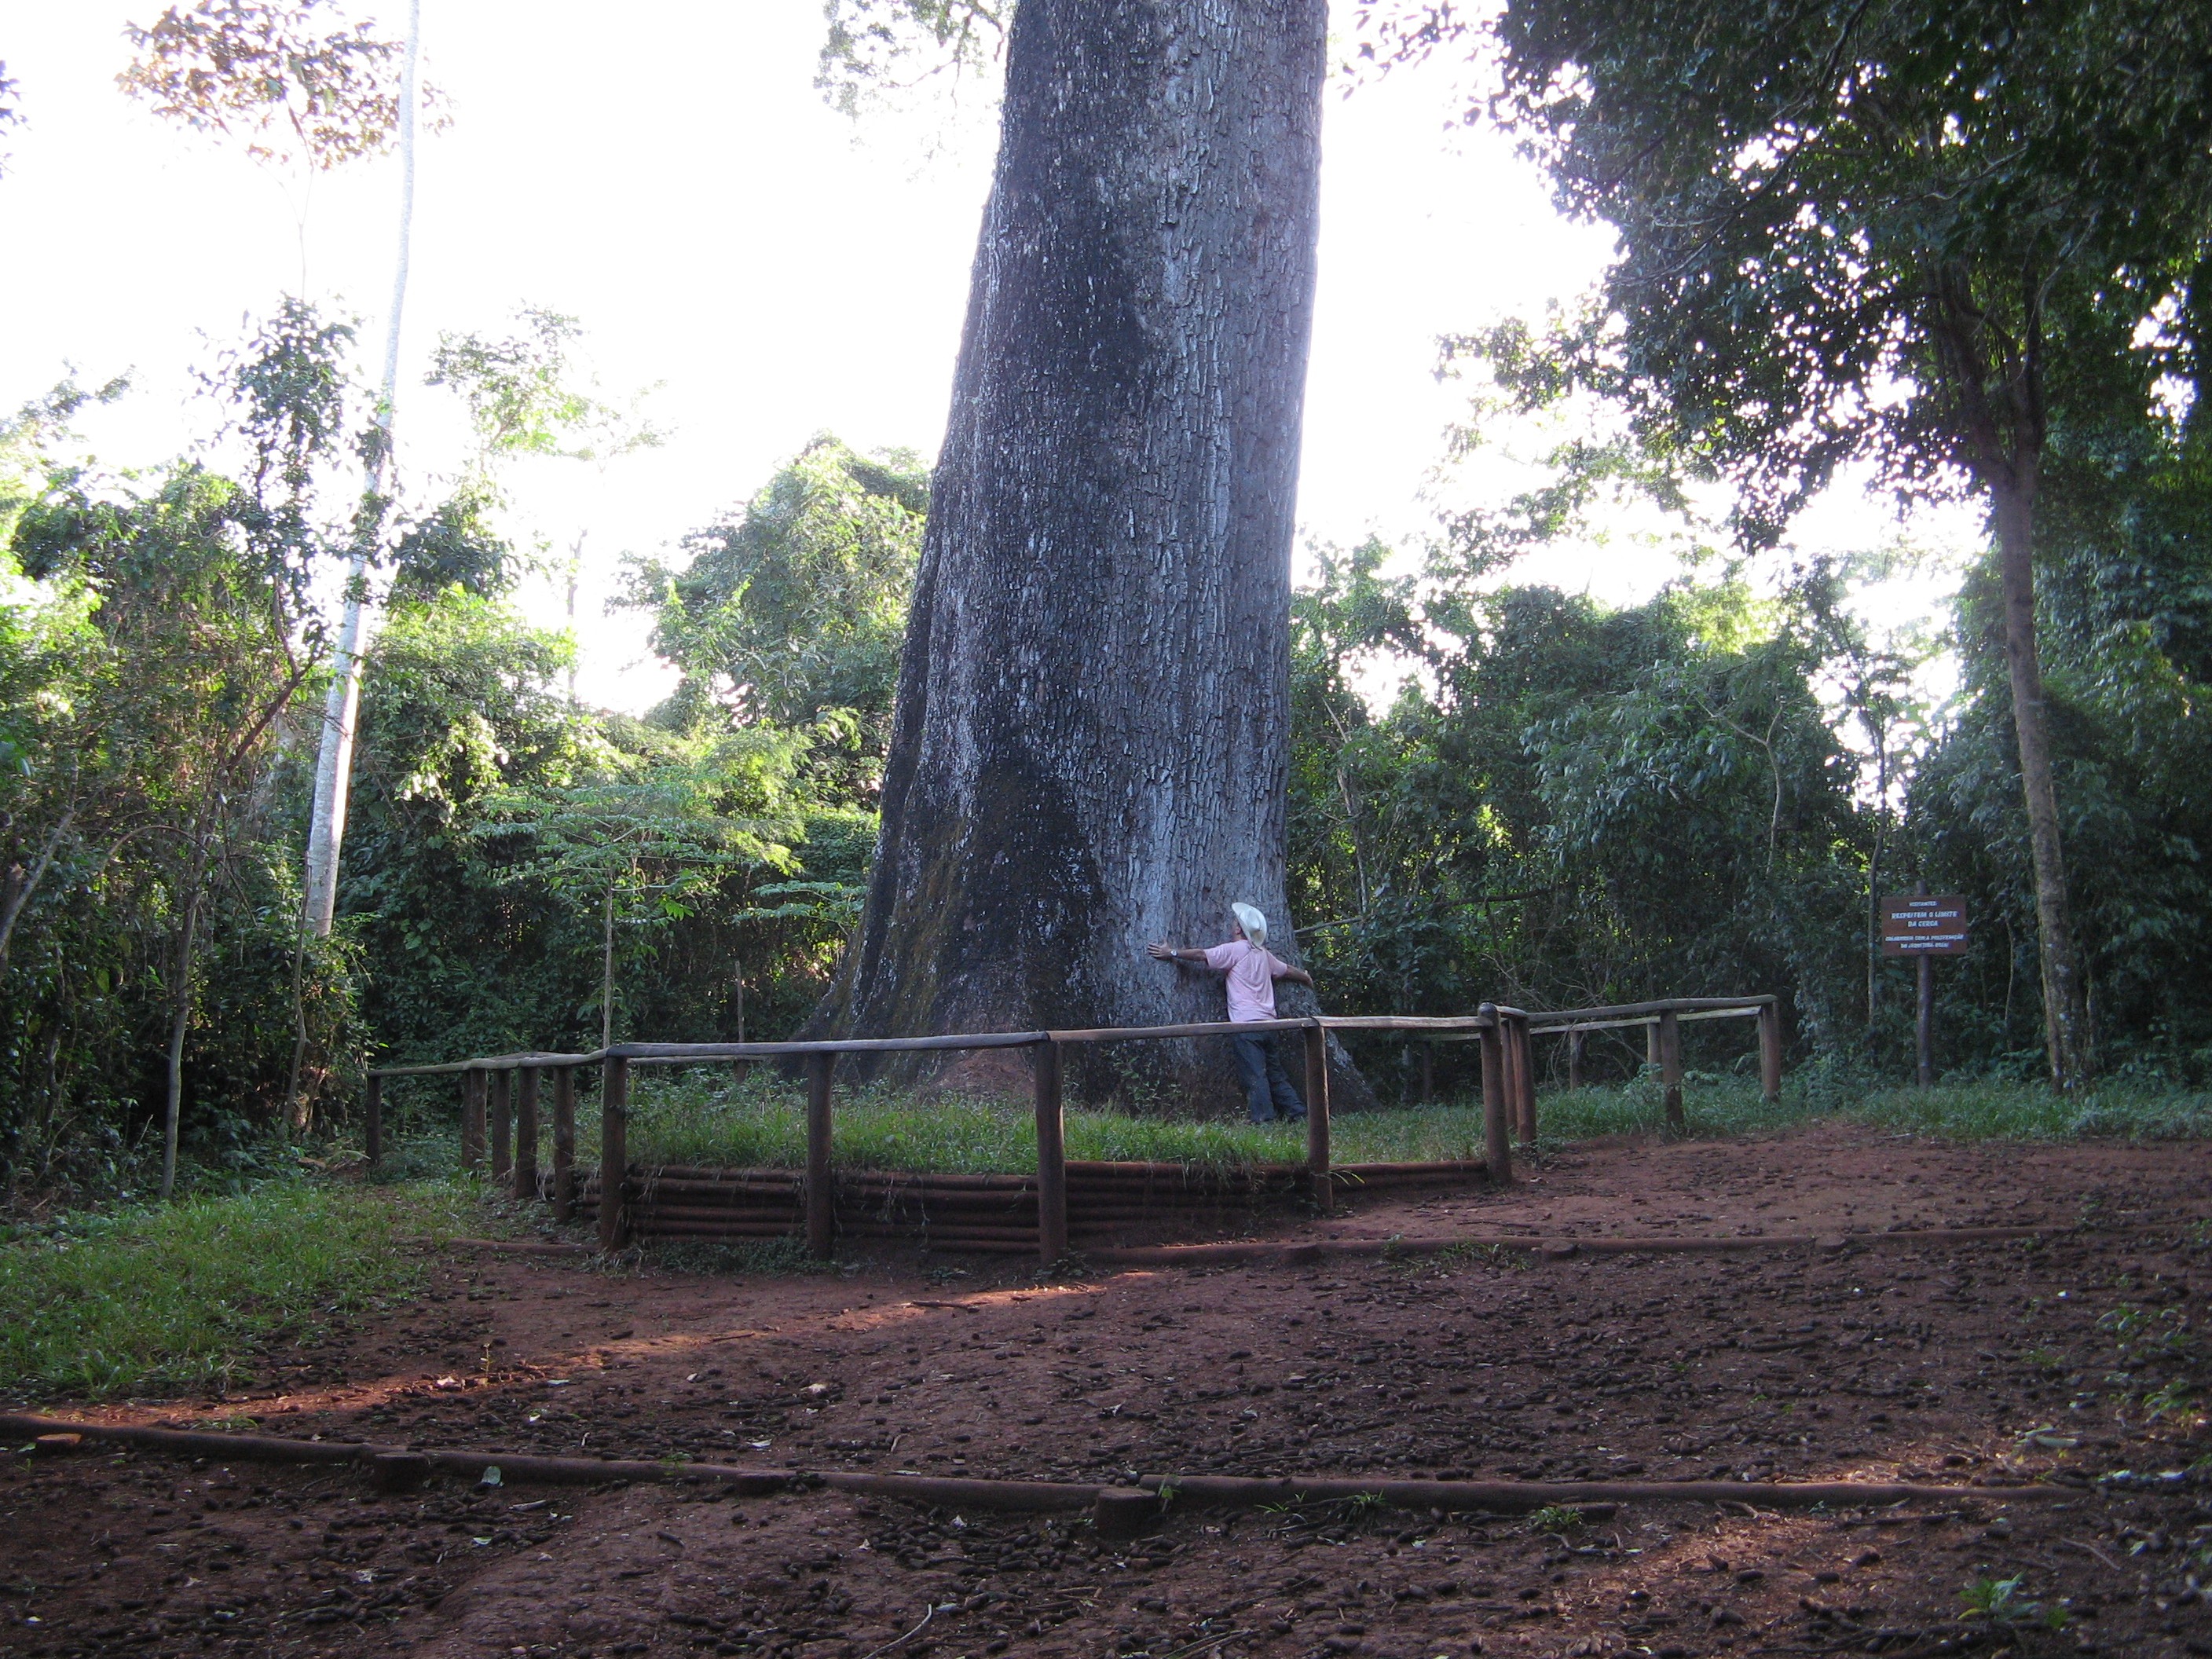 O diâmetro do tronco chega quase aos 4 metros (Foto: Wikimedia Commons)